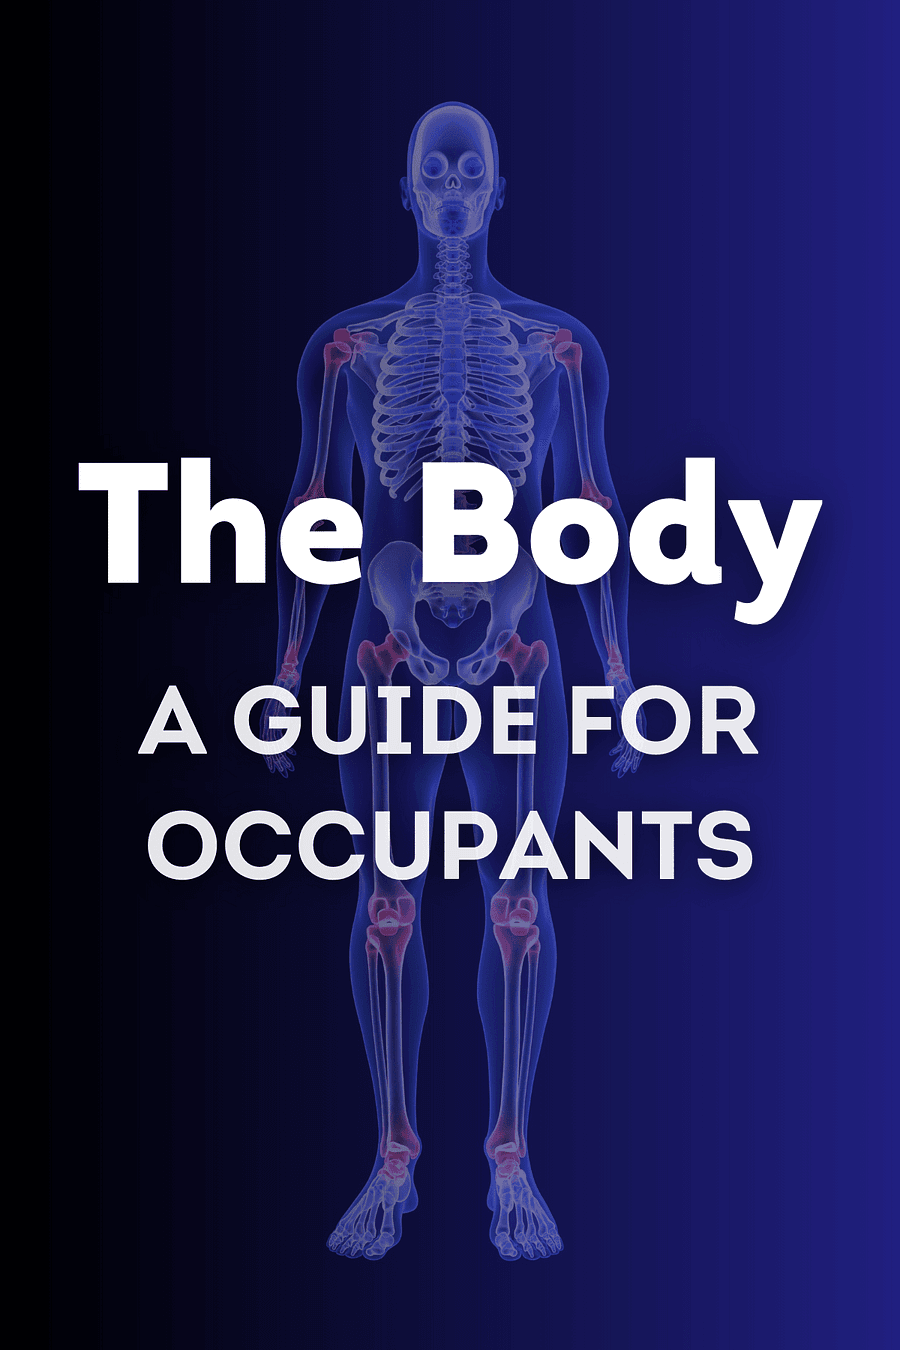 The Body by Bill Bryson - Book Summary